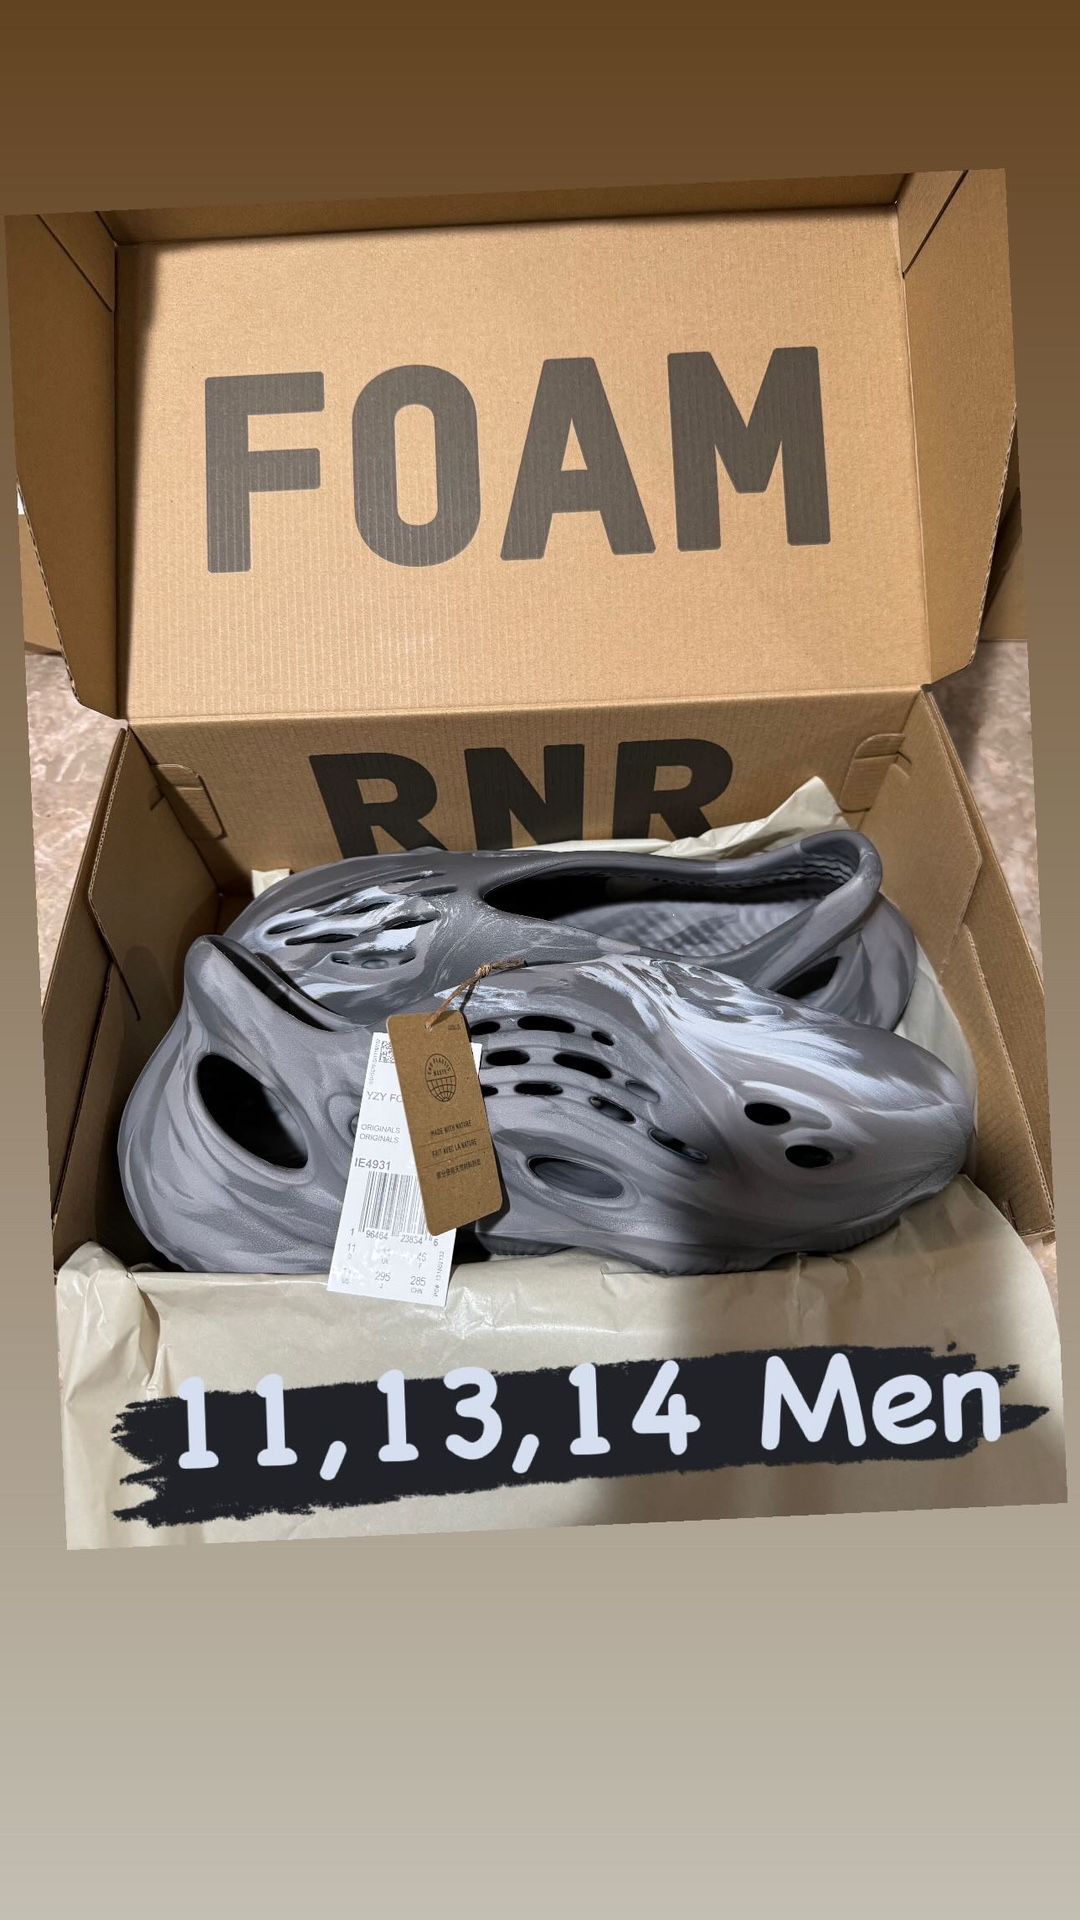 Adidas Yeezy Foam RNR MX Granite Size 11-13-14 Men